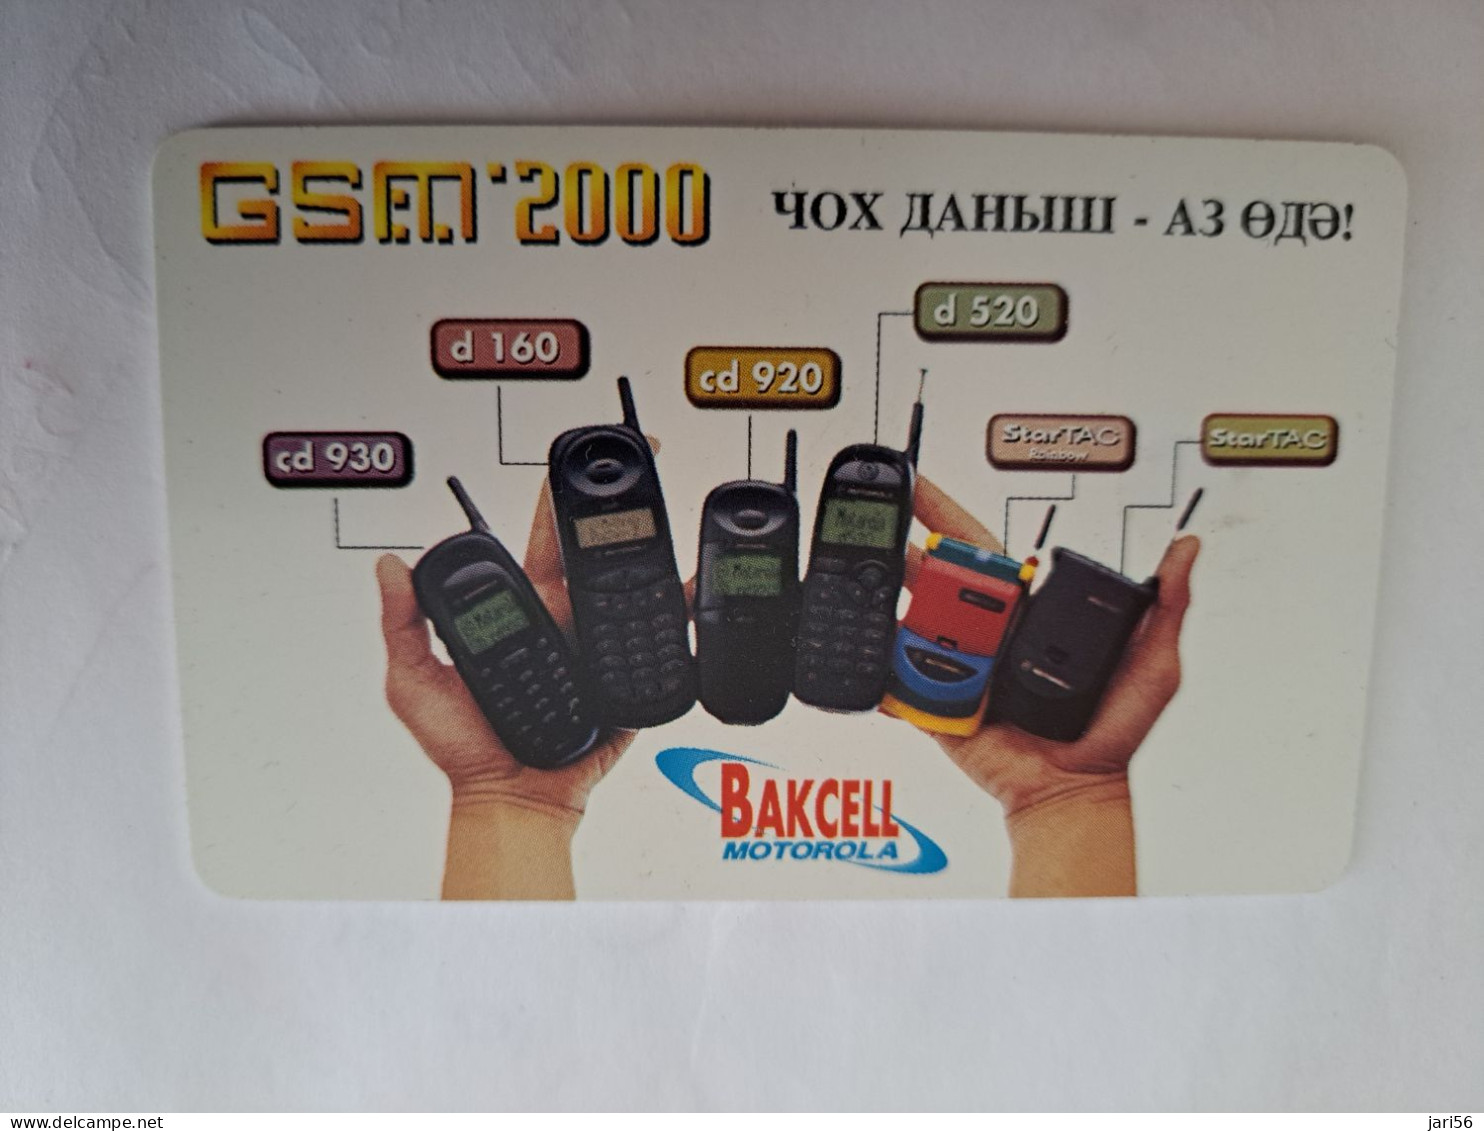 AZERBEIDZJAN/ AZERBAIJAN/ TRUPET/COMMUNICATION TOWER/ MOTOR ROLA PHONES 140 UNITS   / FINE USED ** 14063** - Aserbaidschan